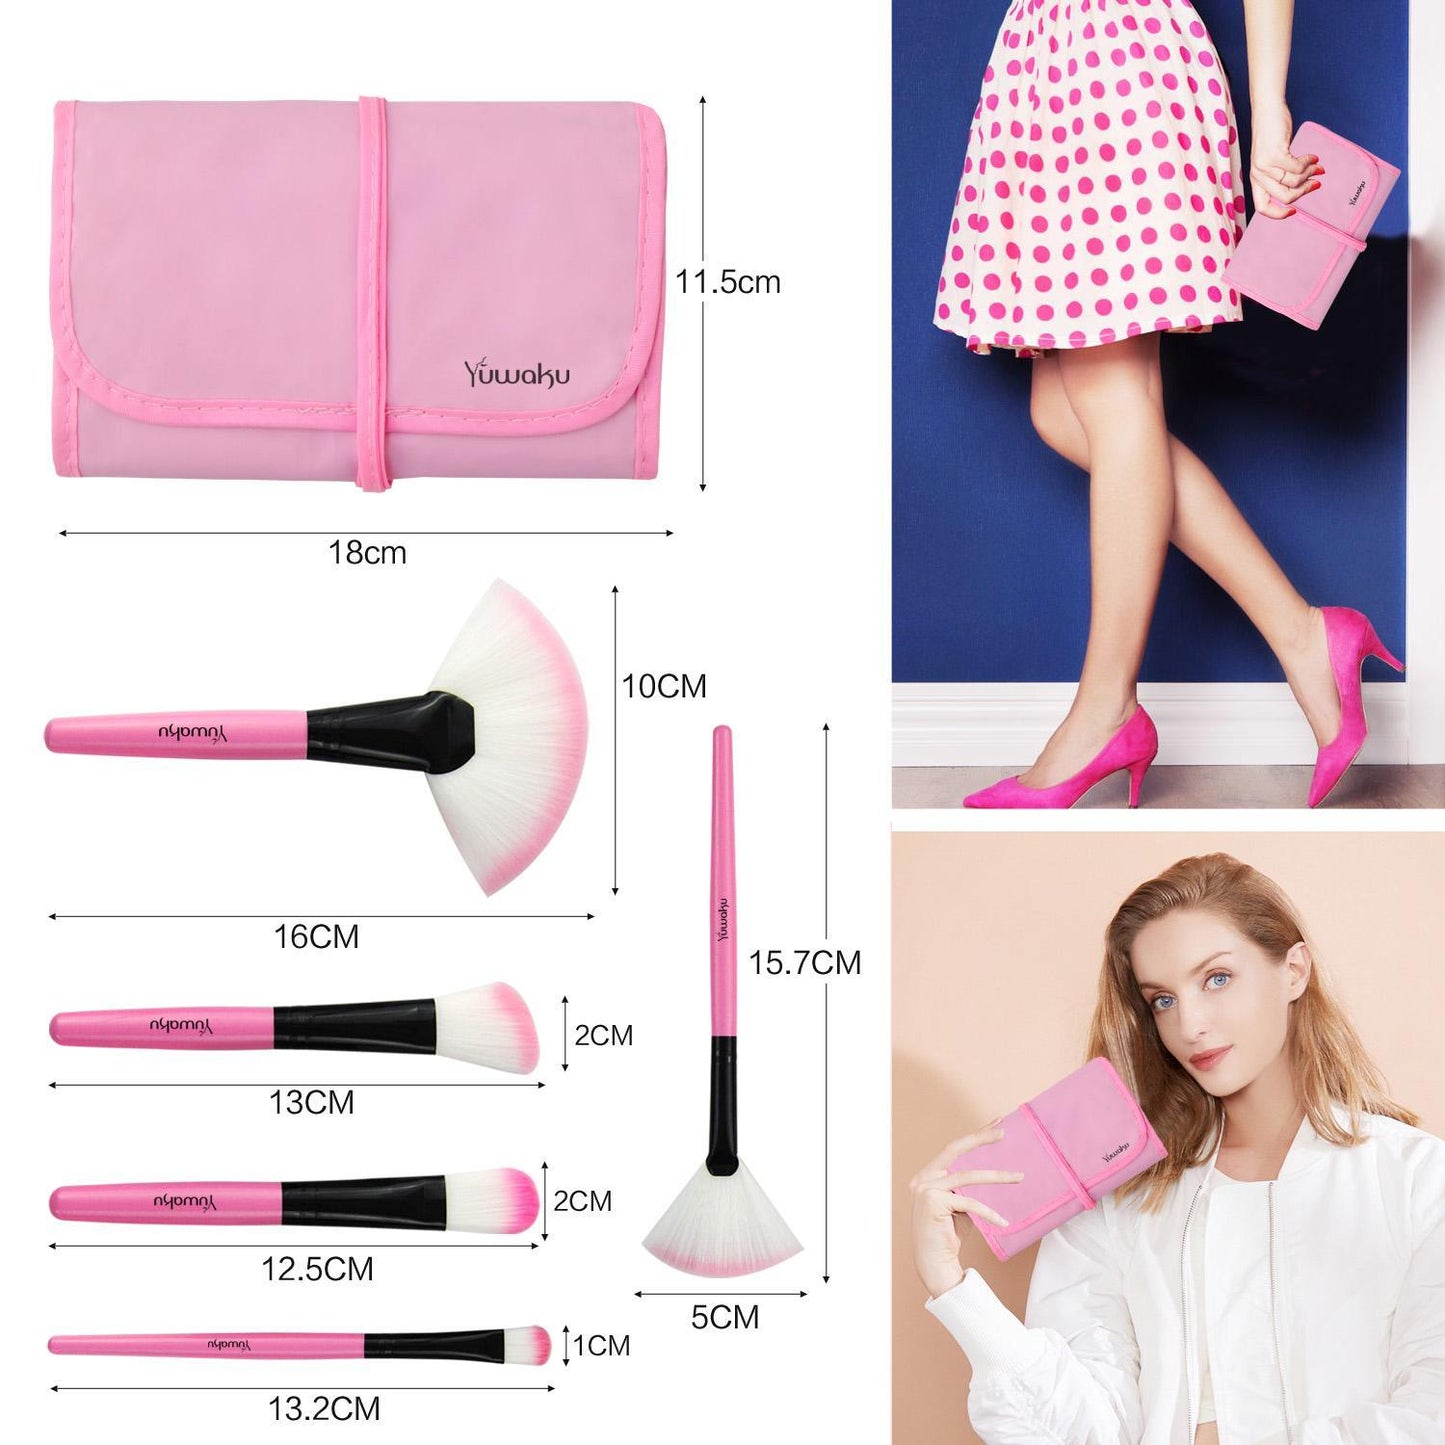 32 professional makeup brushes set; facial eye shadow eyeliner foundation blush lip powder liquid cream blending brush (pink)